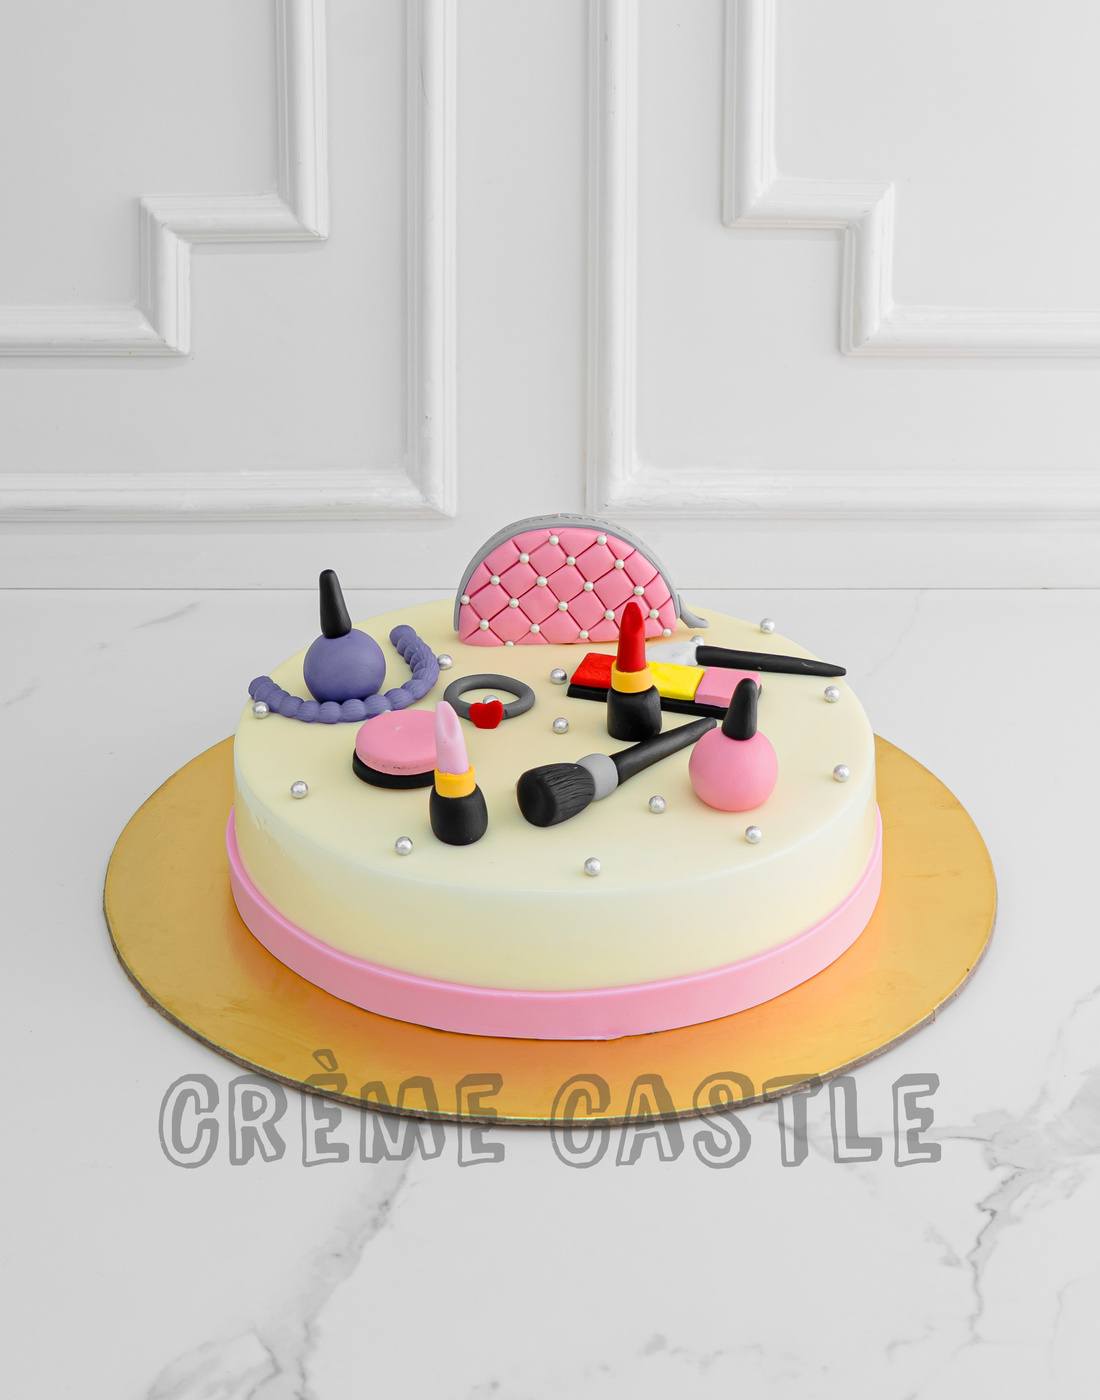 Birthday Cakes For Girlfriend - 20+ Romantic Cake design For Her ( 2021)